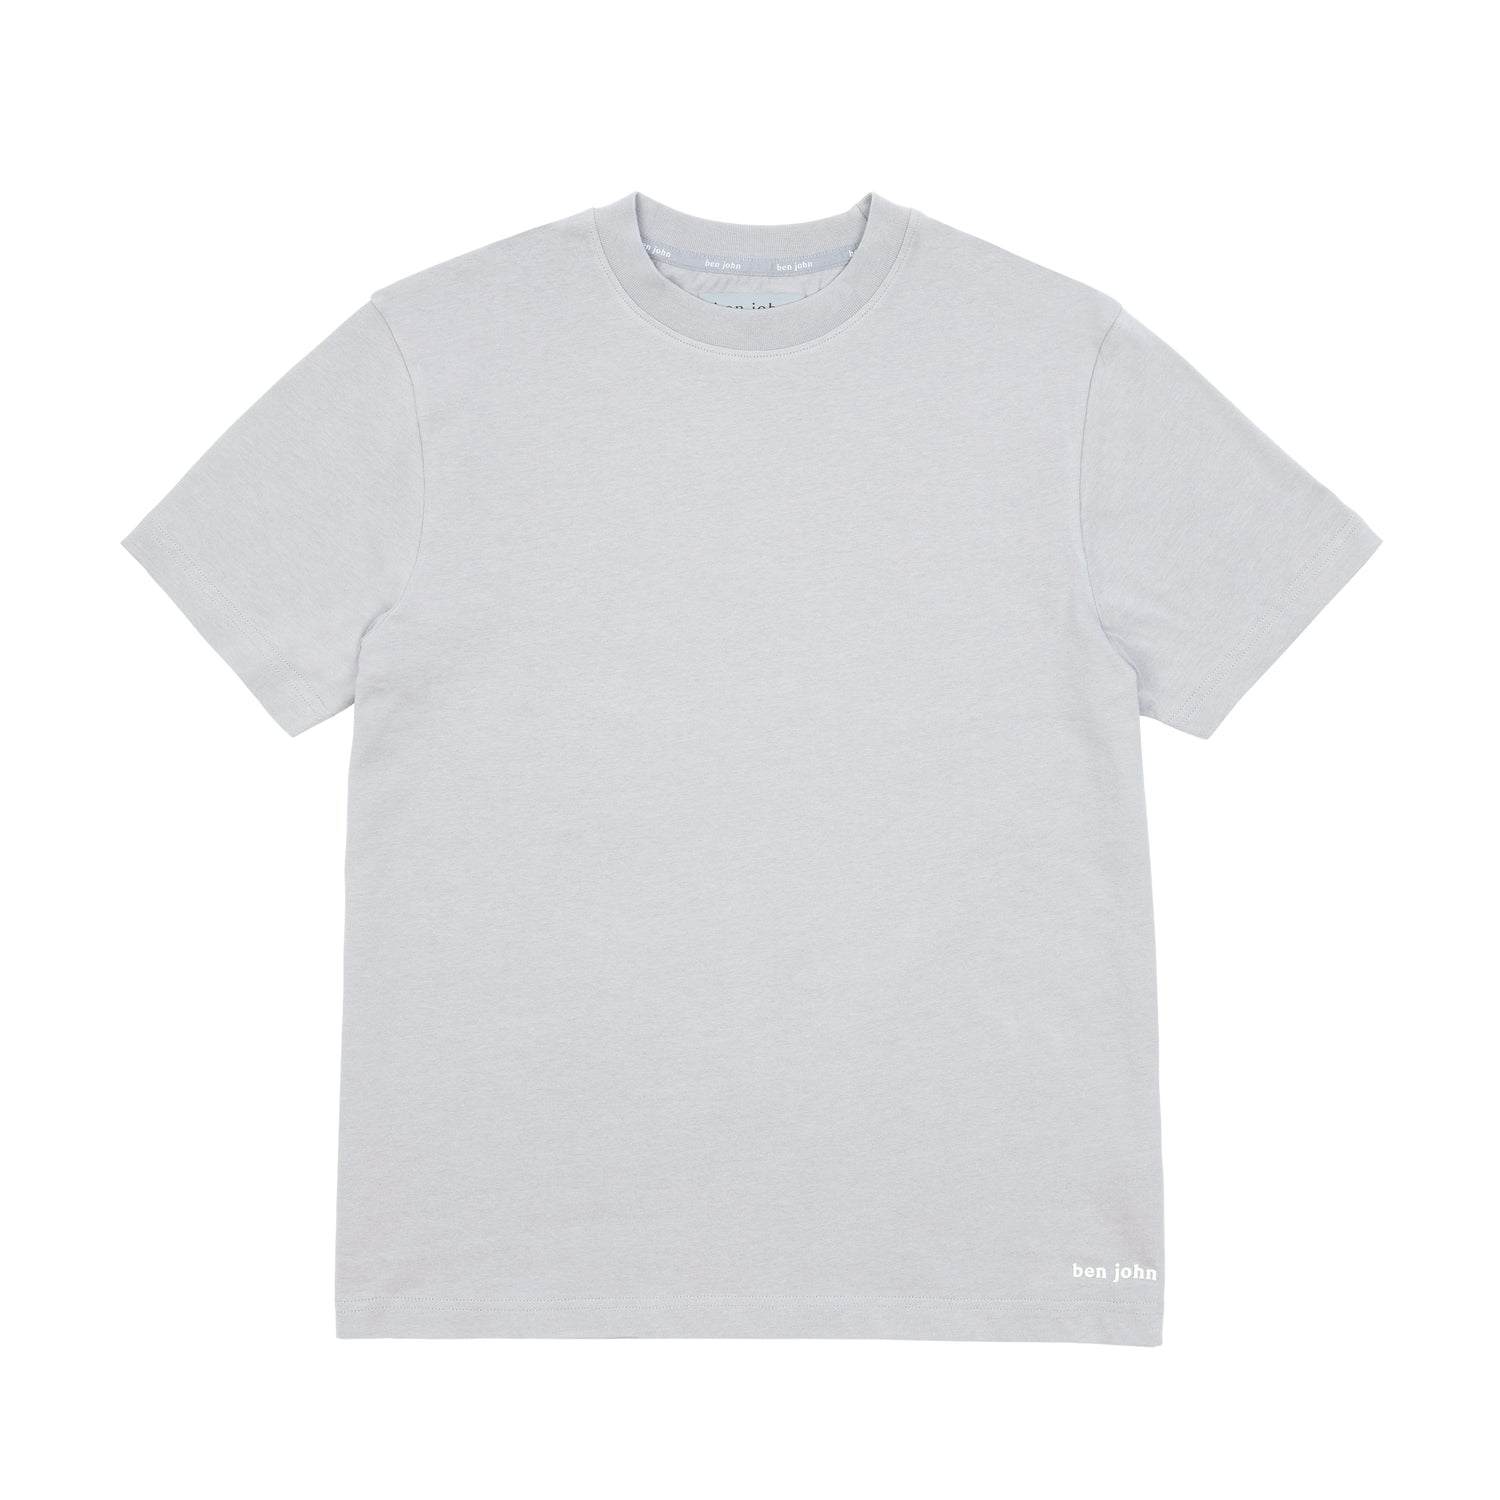 Short-Sleeve Crew Neck T-Shirt